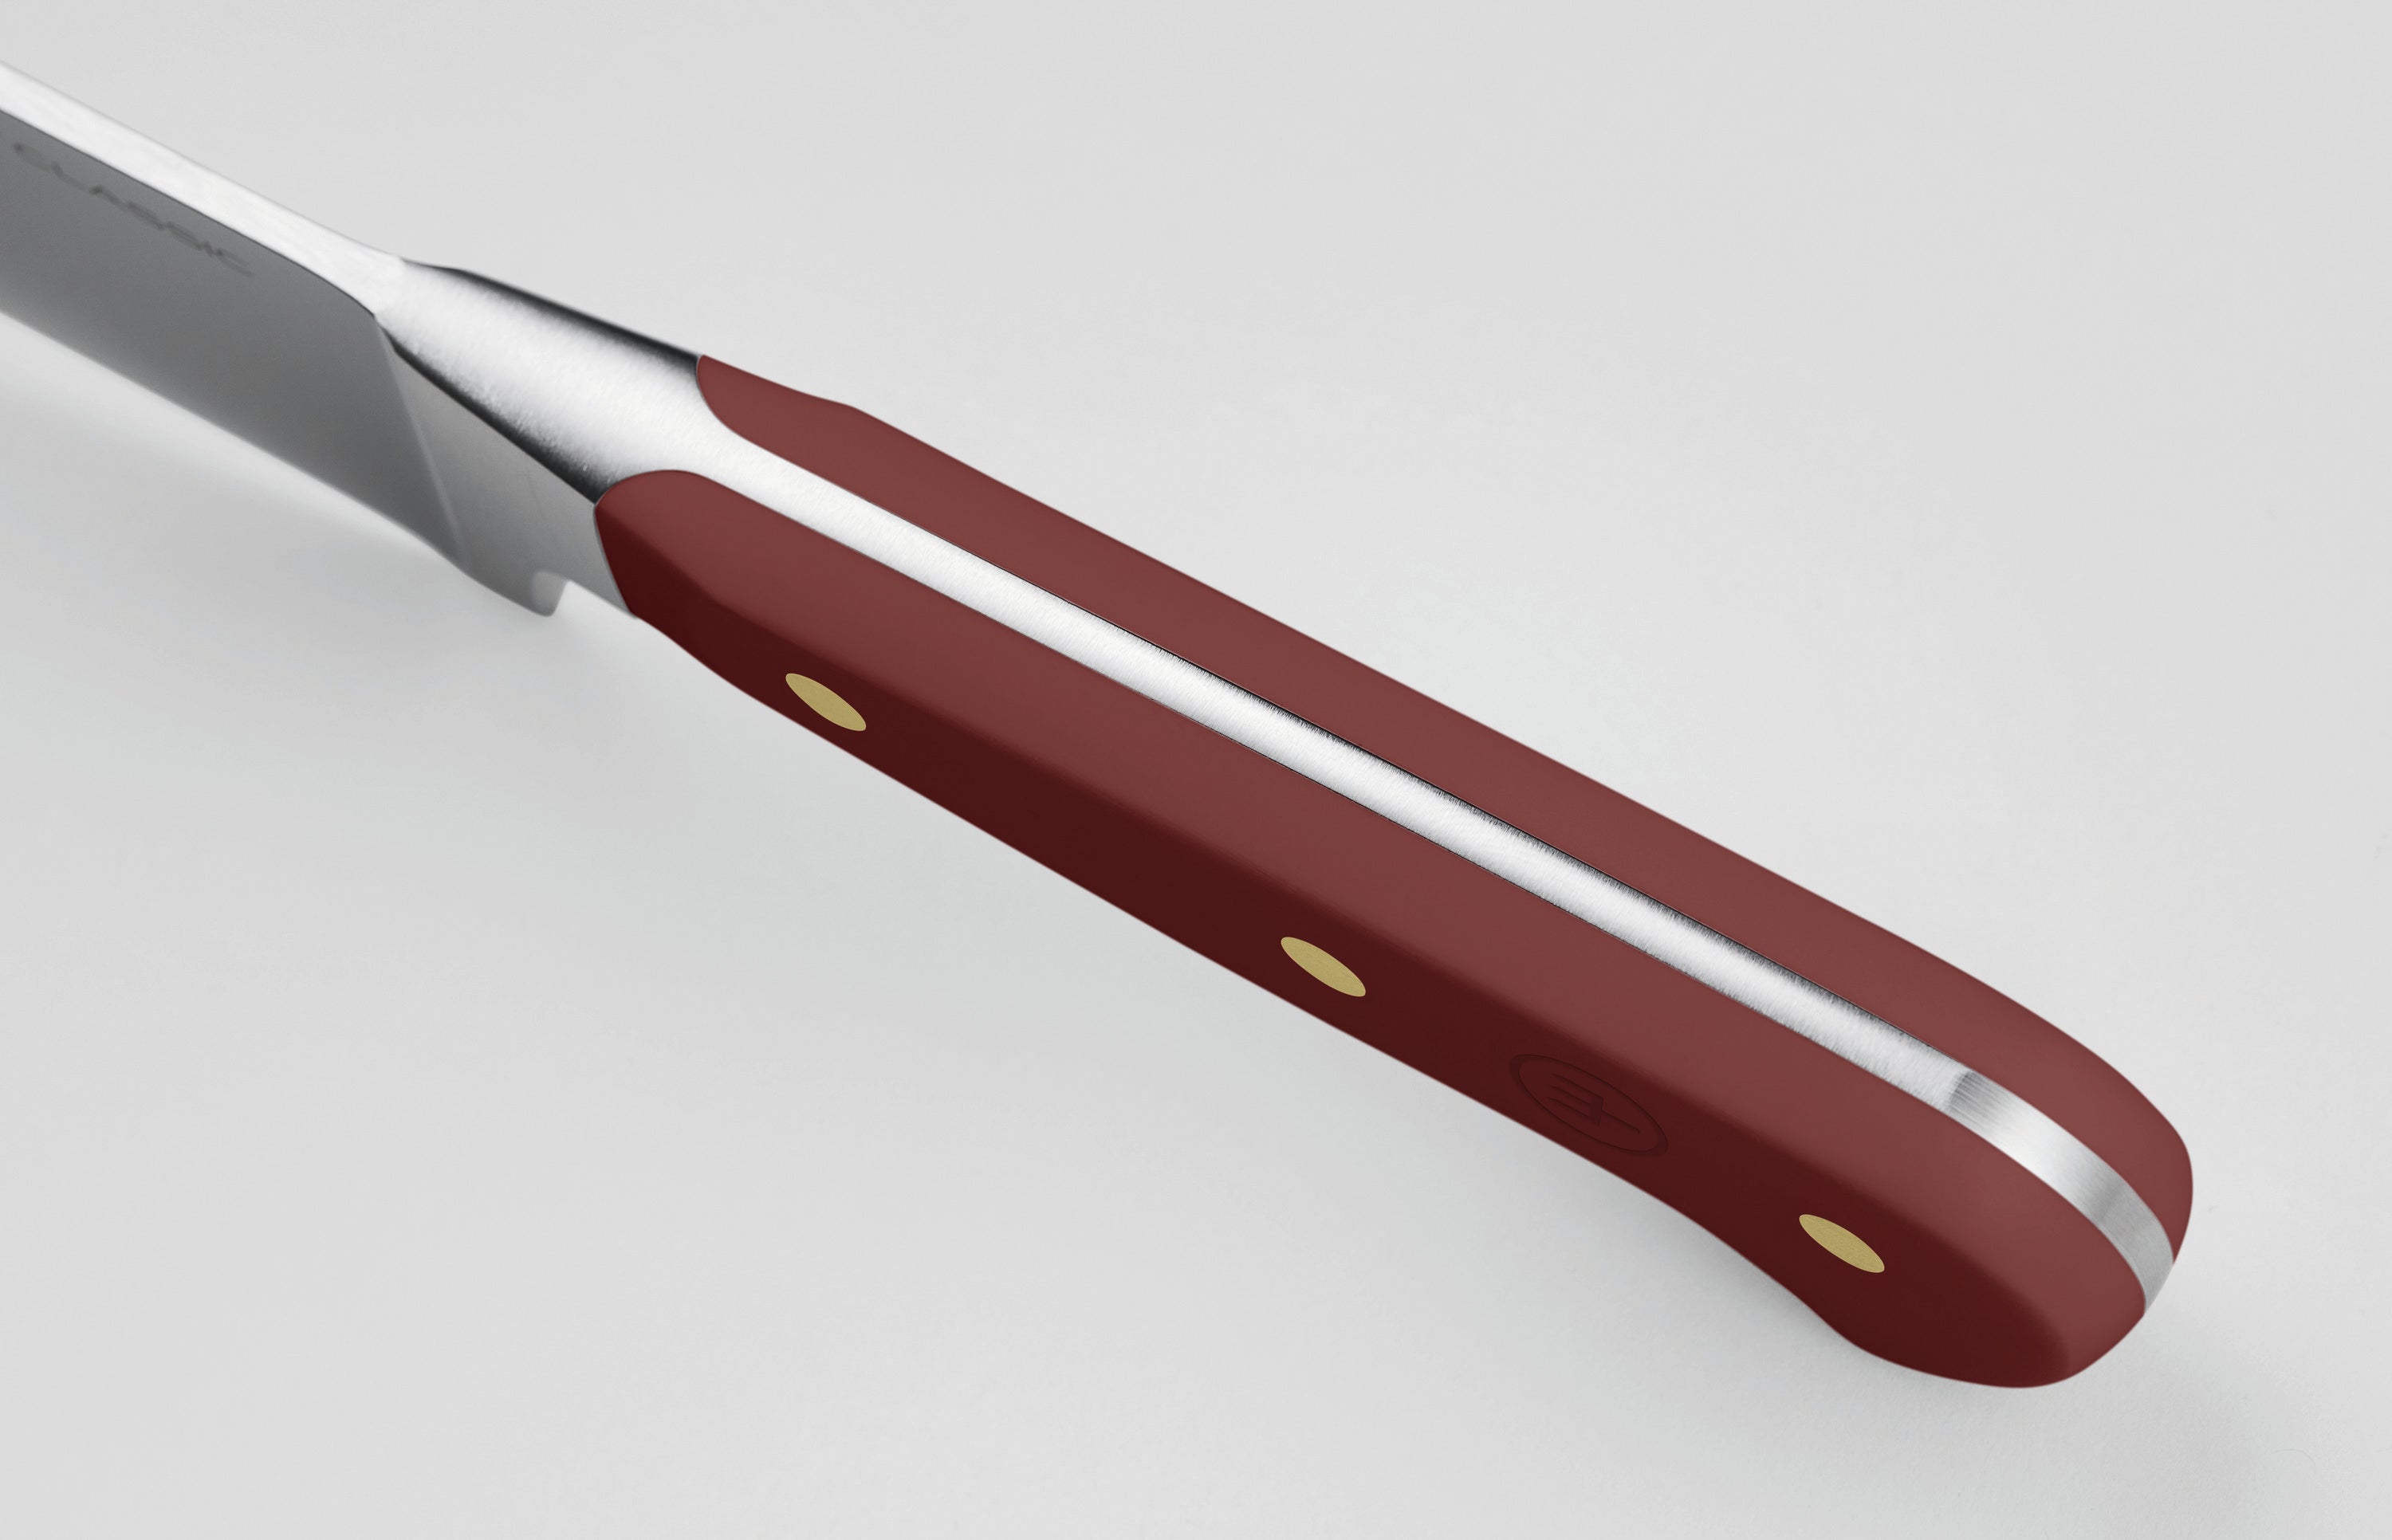 Wusthof Classic Colour Tasty Sumac Chef's Knife 16cm 1061700516W